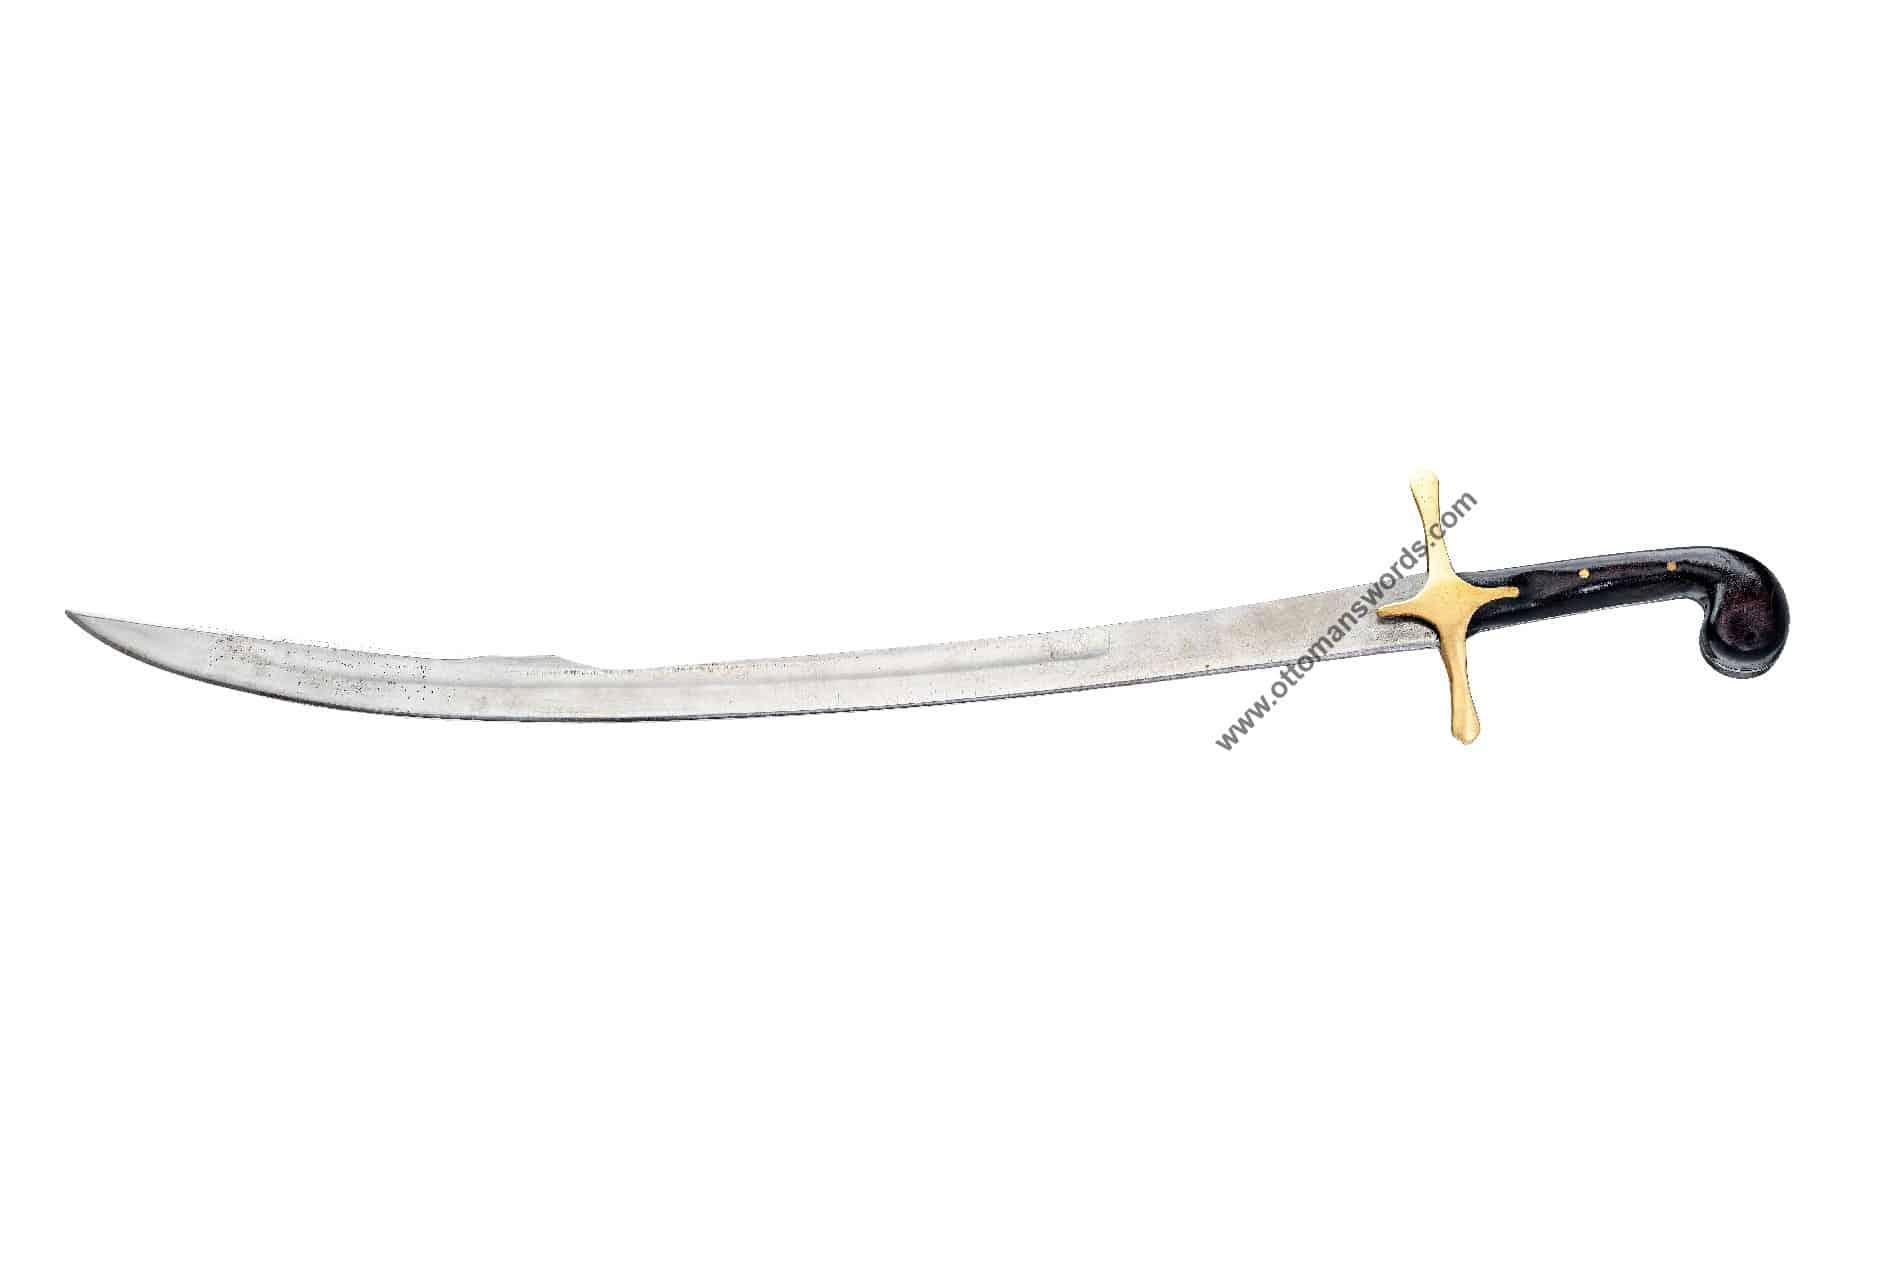 buy hand forged turkish kilij sword online shop (7)